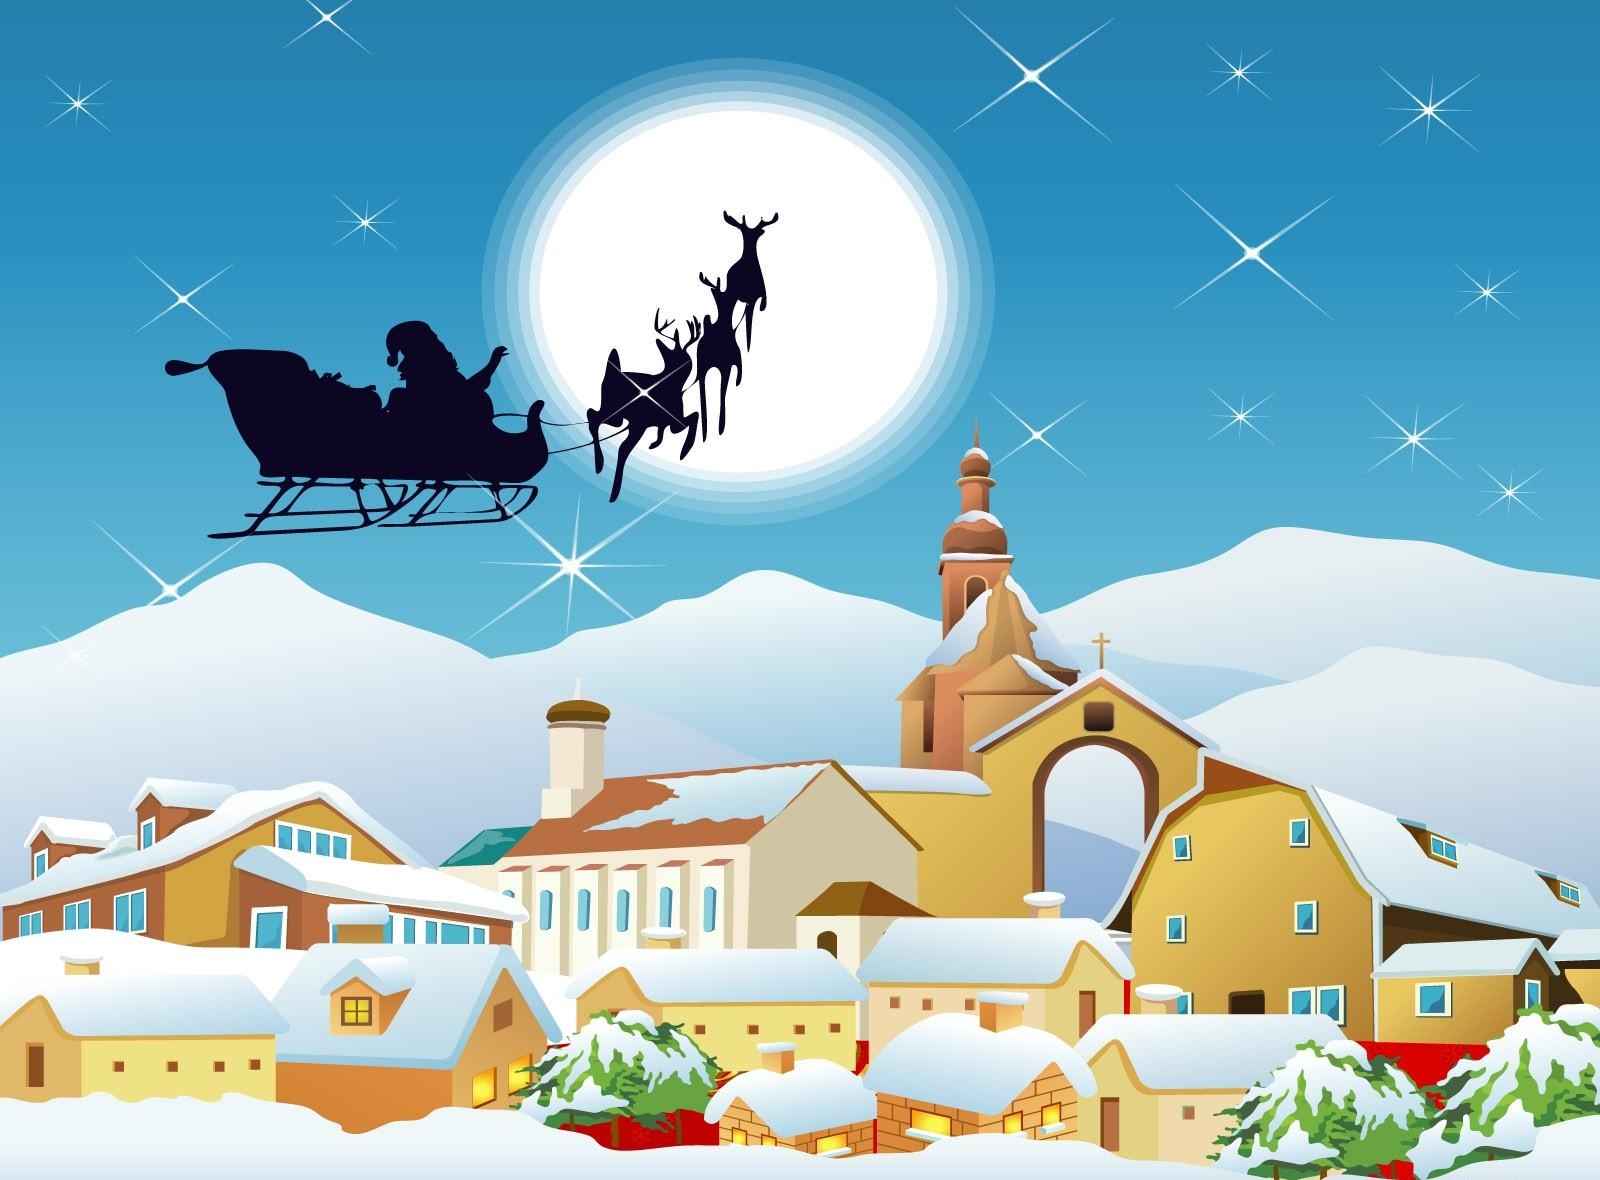 Download PC Wallpaper holidays, houses, santa claus, moon, city, flight, sleigh, sledge